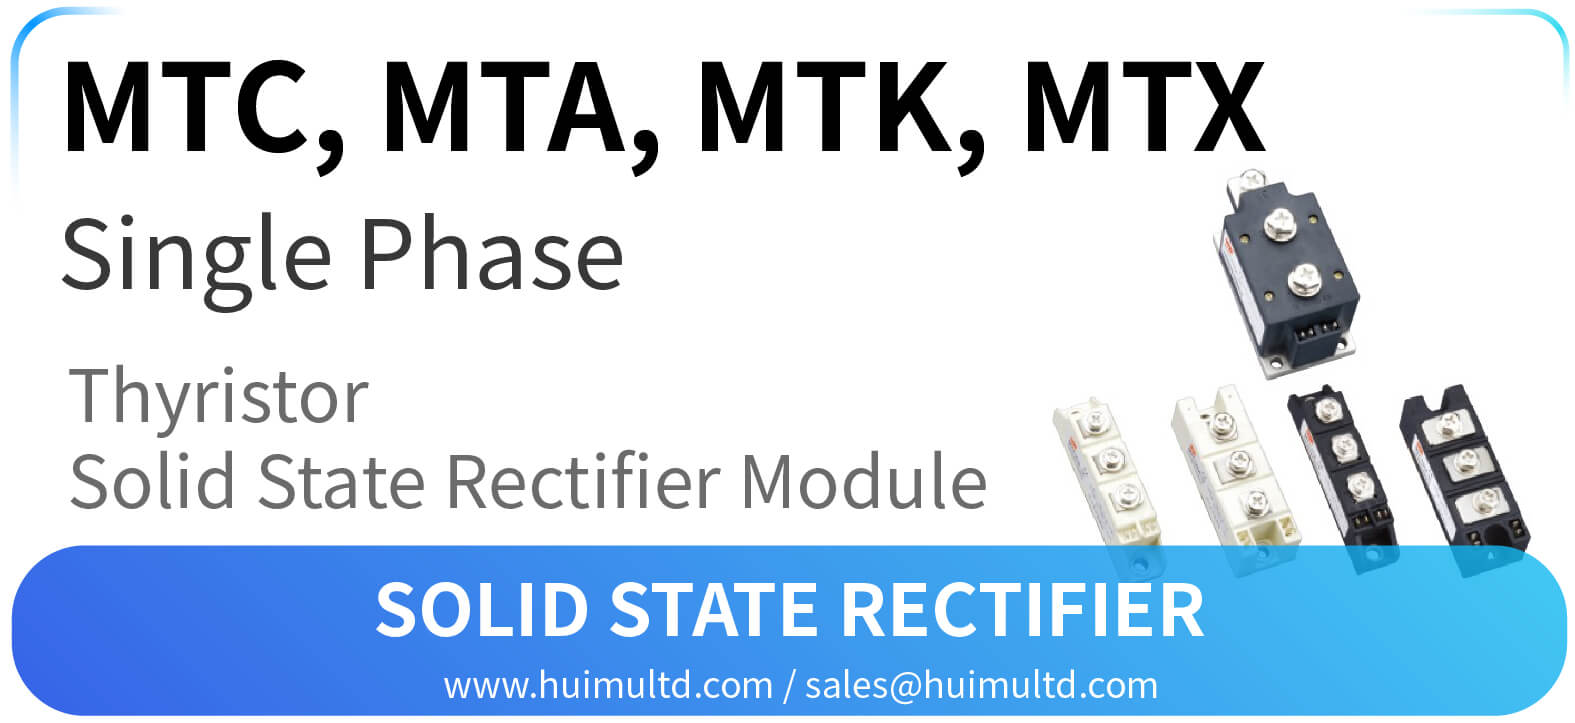 MTC, MTA, MTK, MTX Series Solid State Rectifier